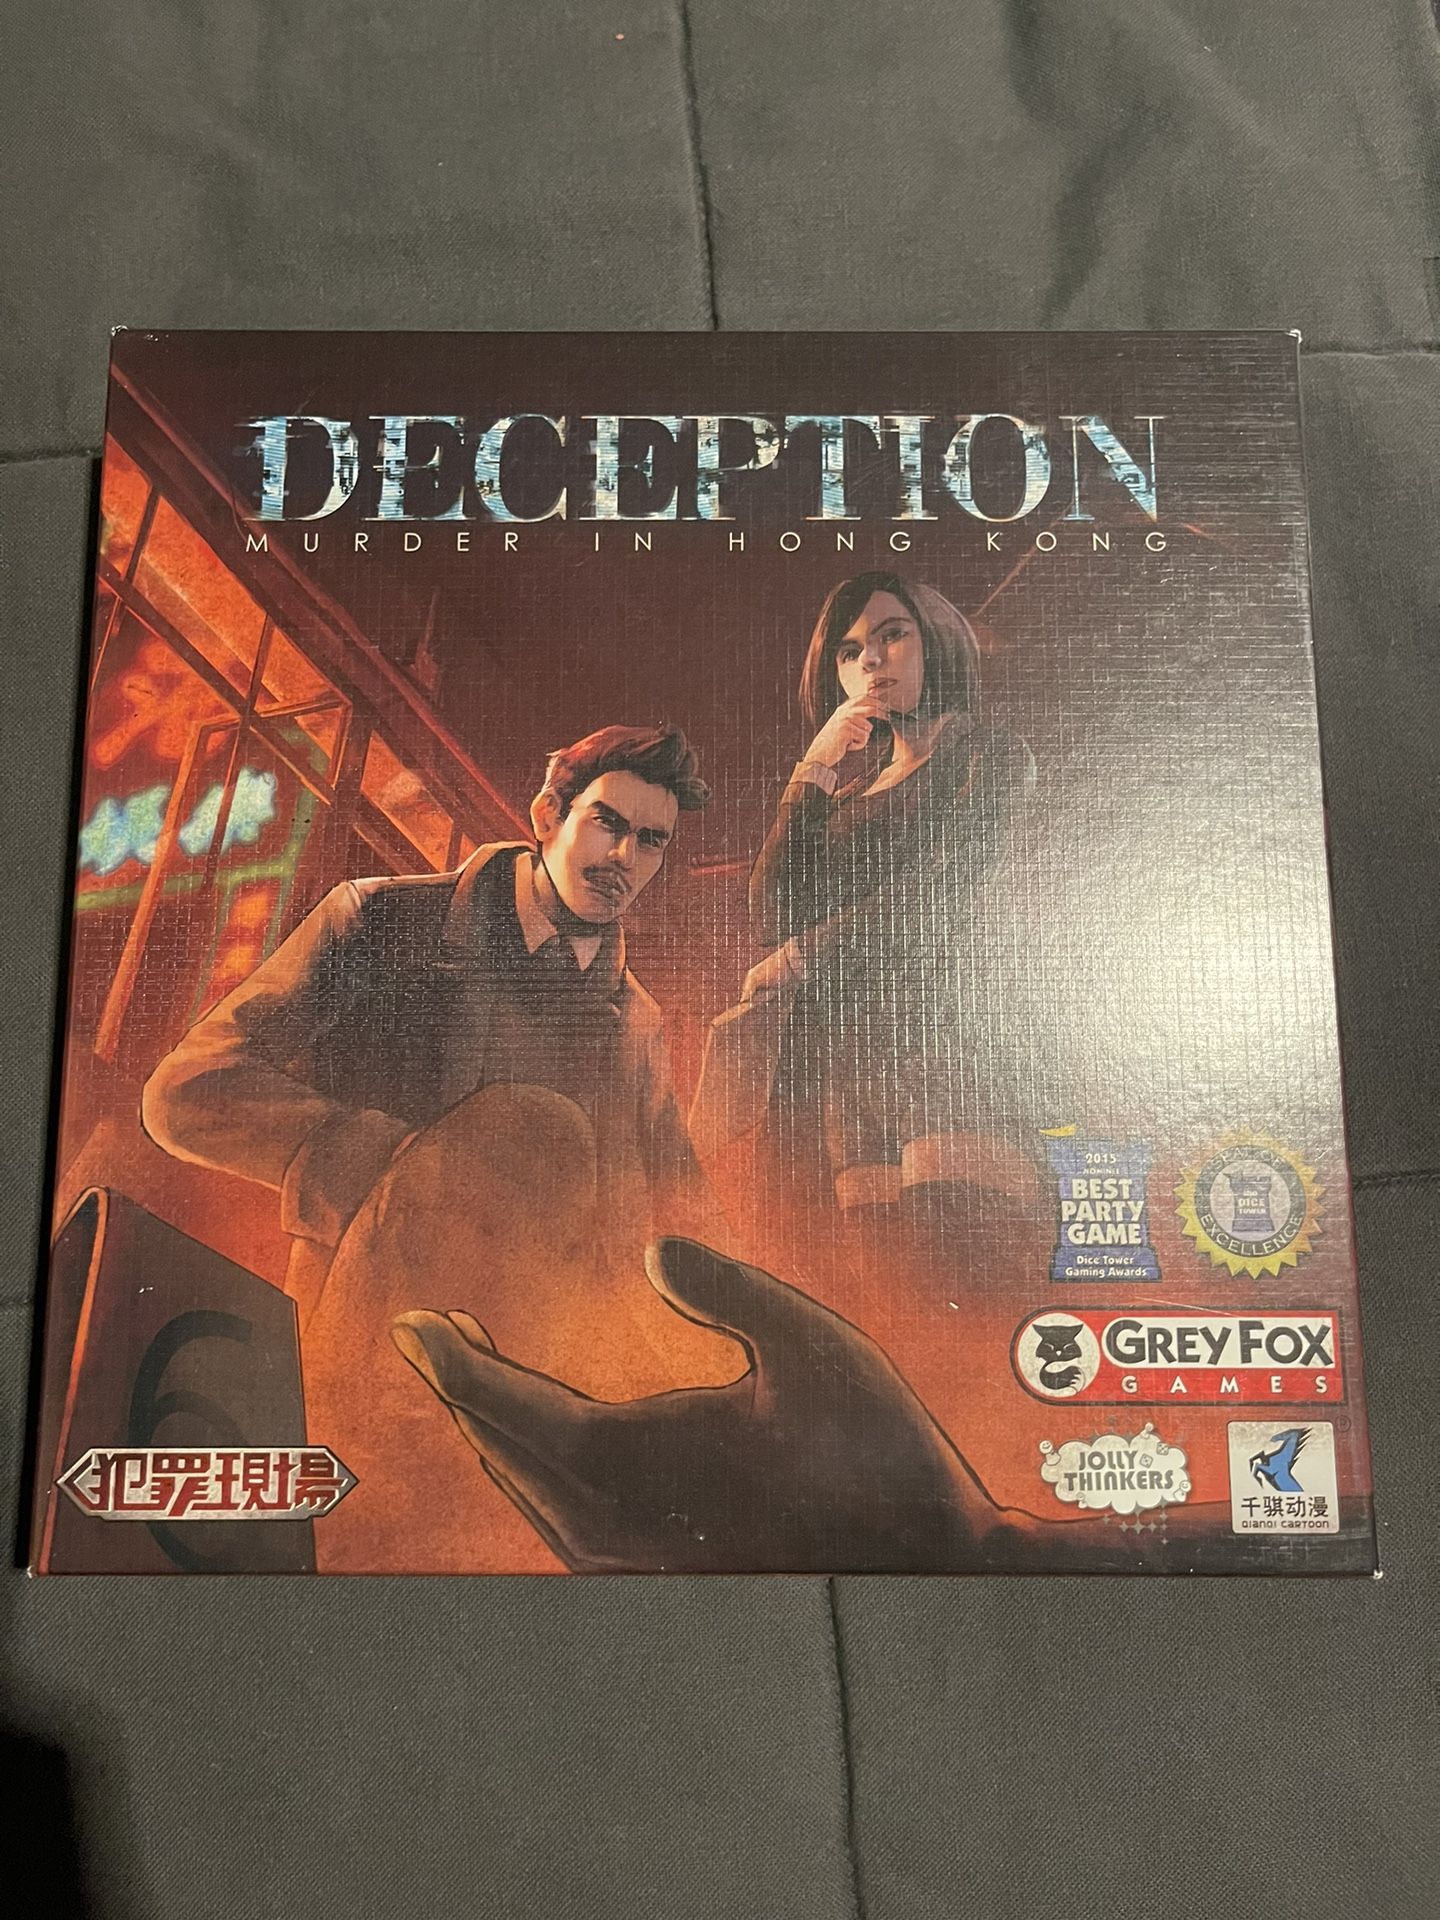 Deception Murder In Hong Kong Board Game